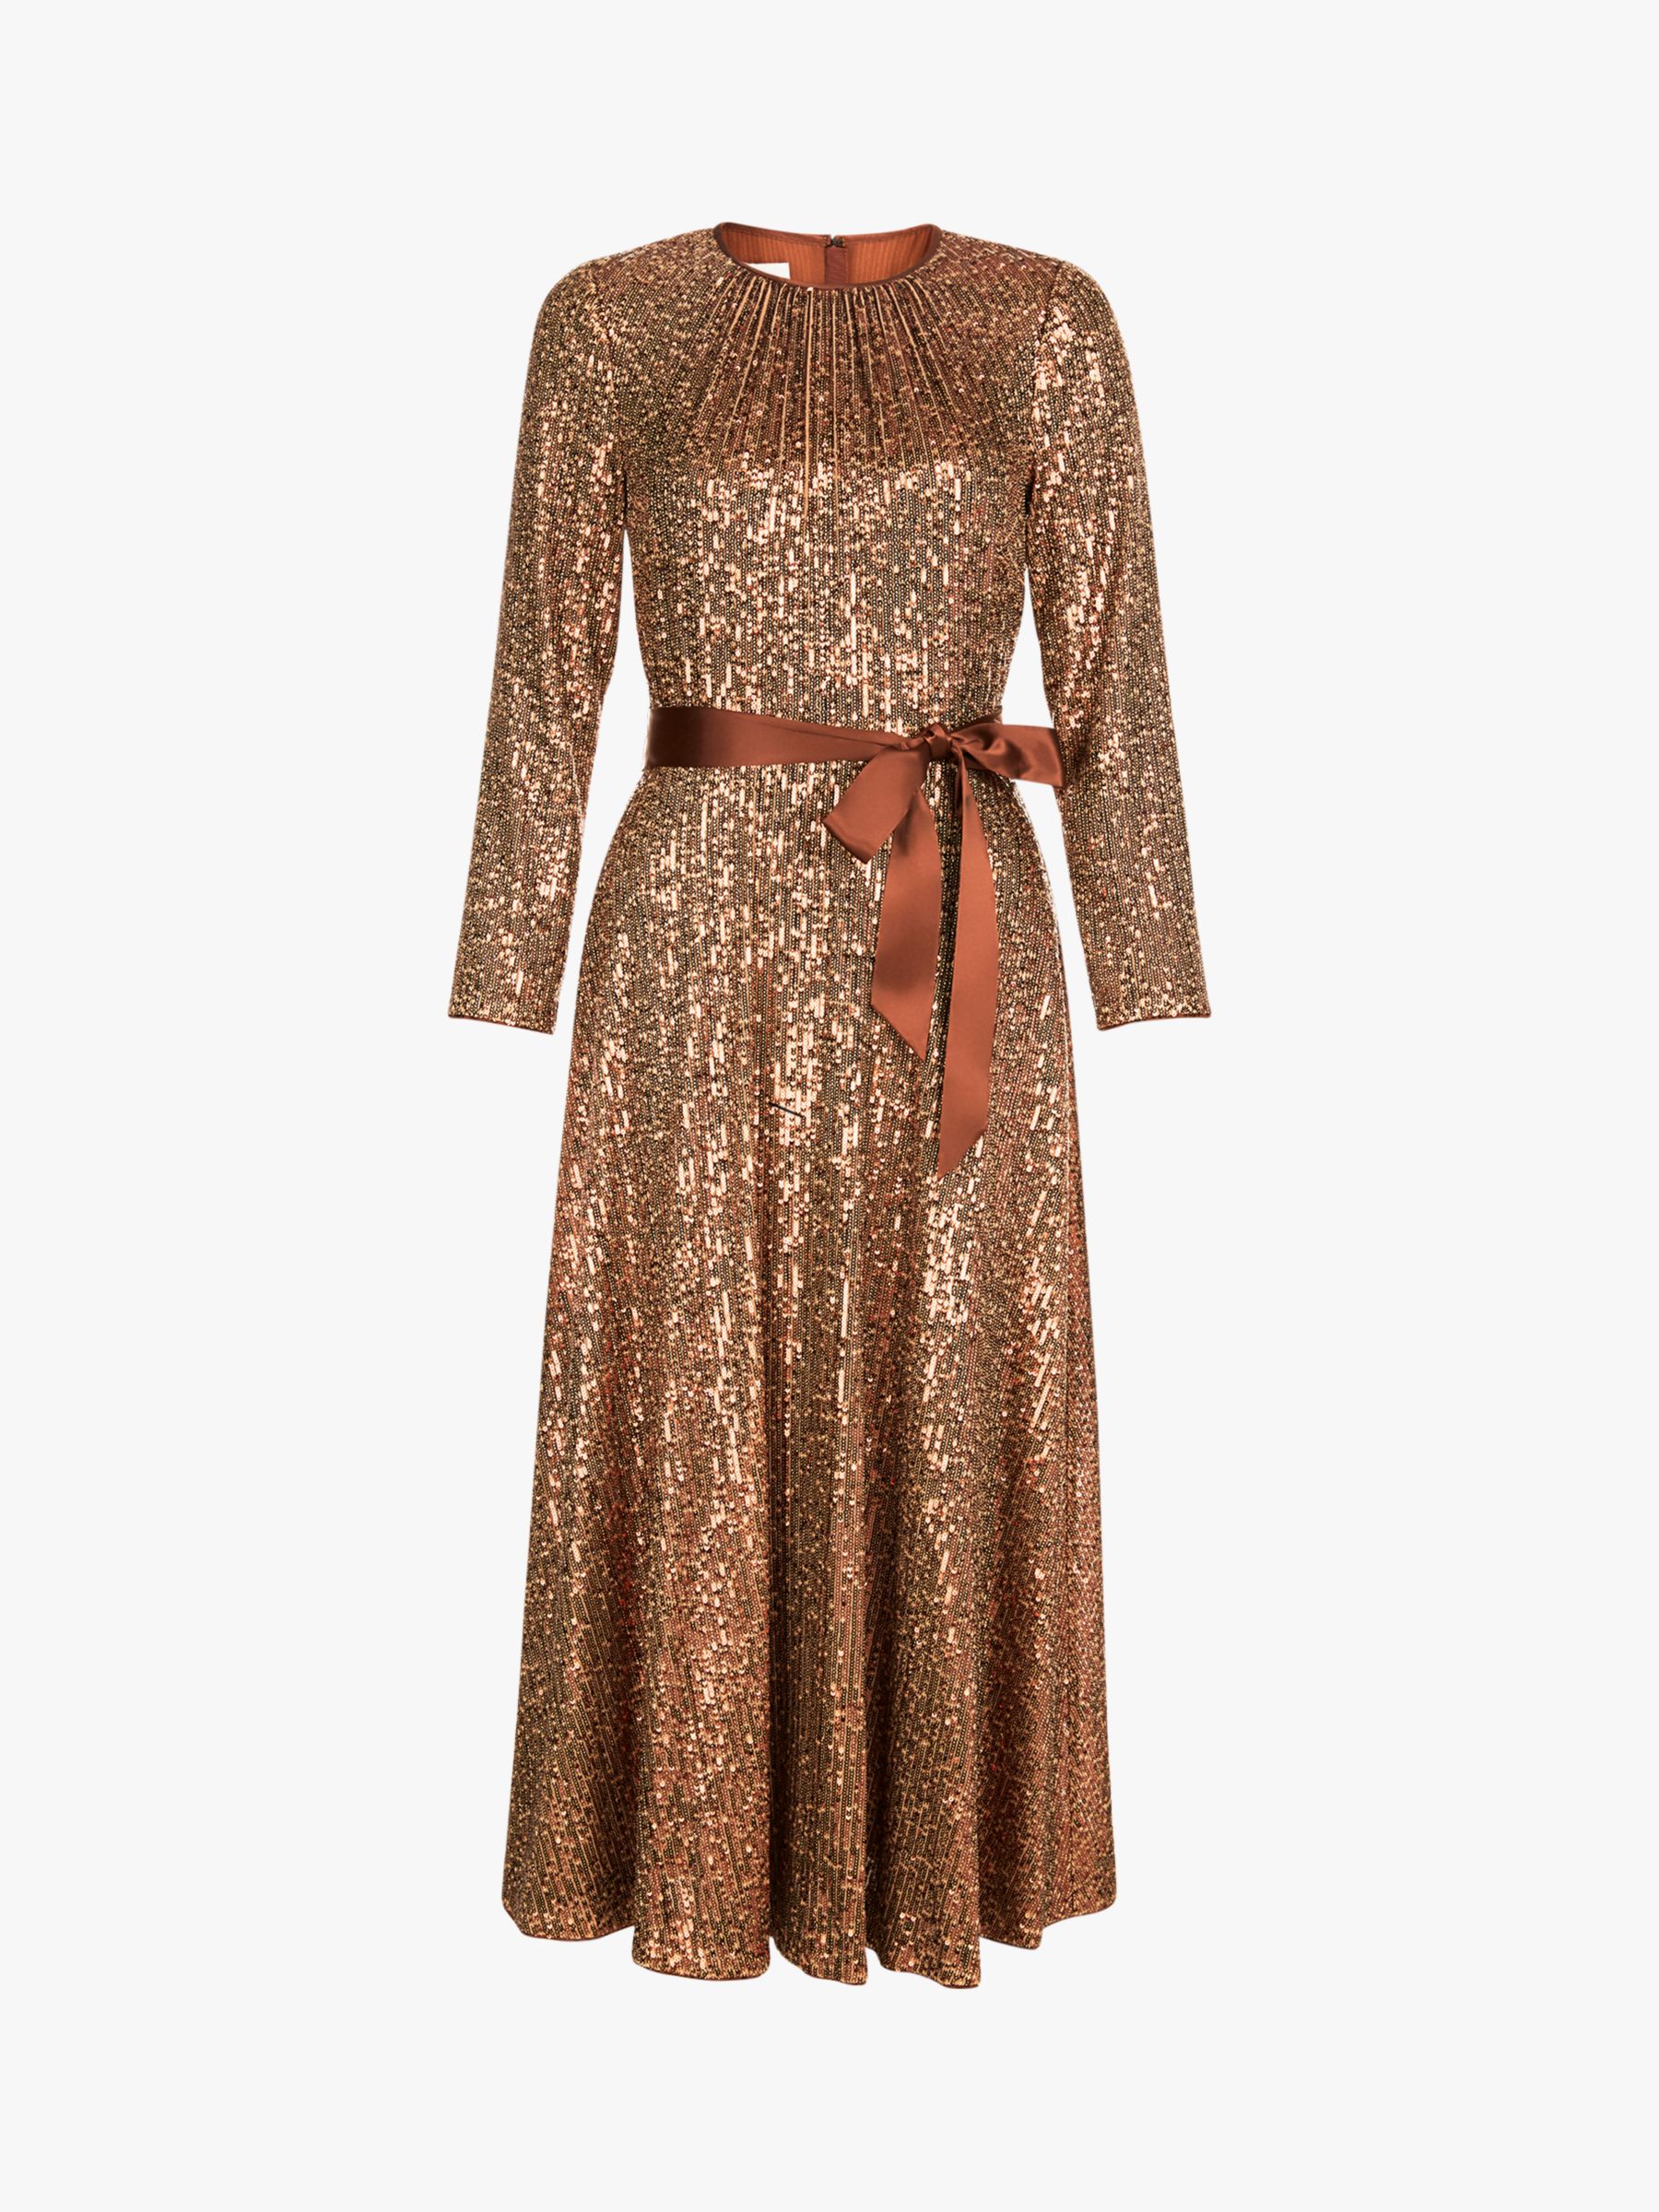 Hobbs Salma Dress, Copper at John Lewis & Partners